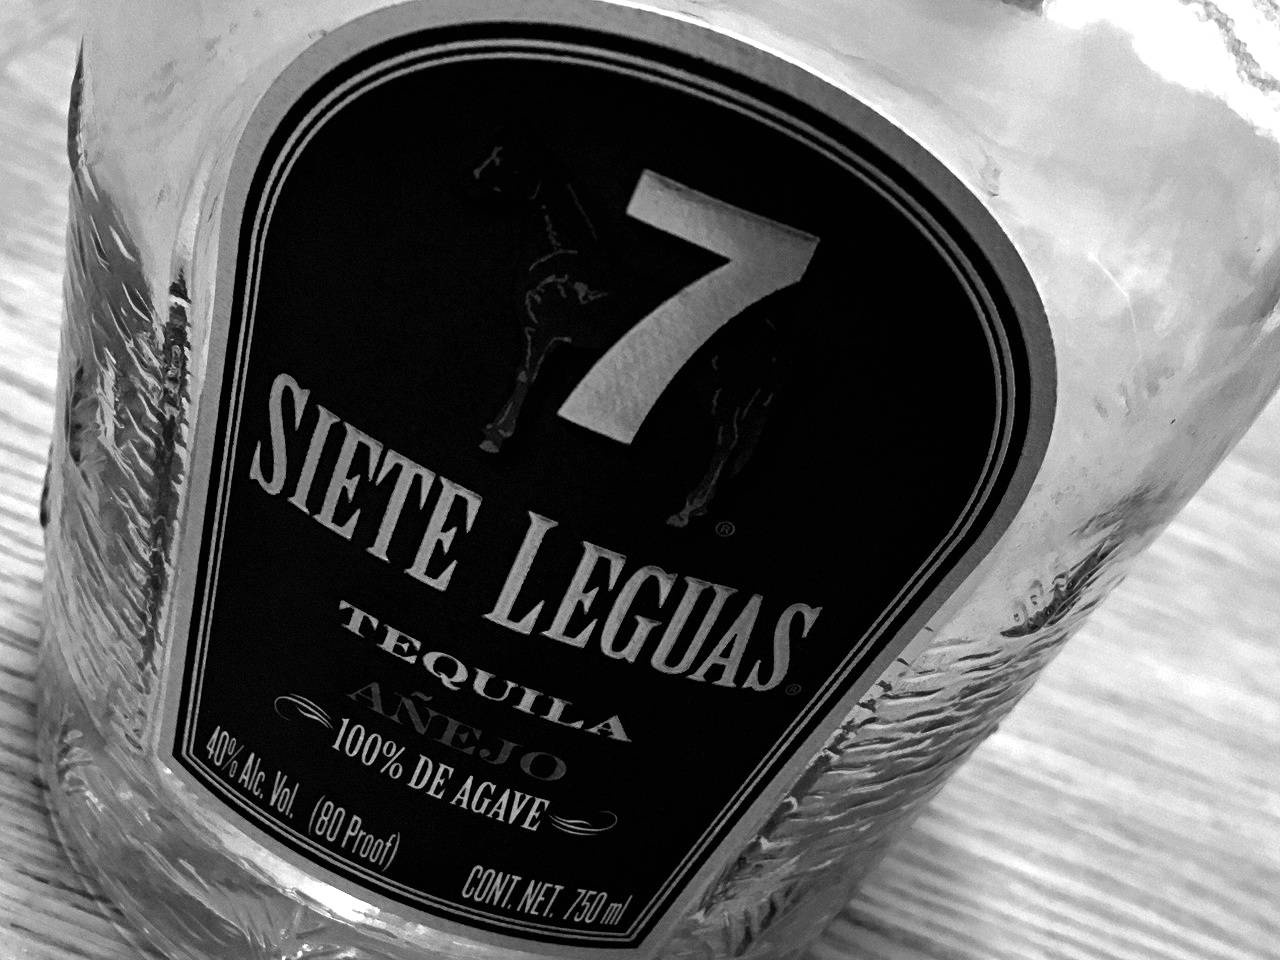 Caption: Sophisticated Siete Leguas Tequila Bottle in Monochrome Wallpaper